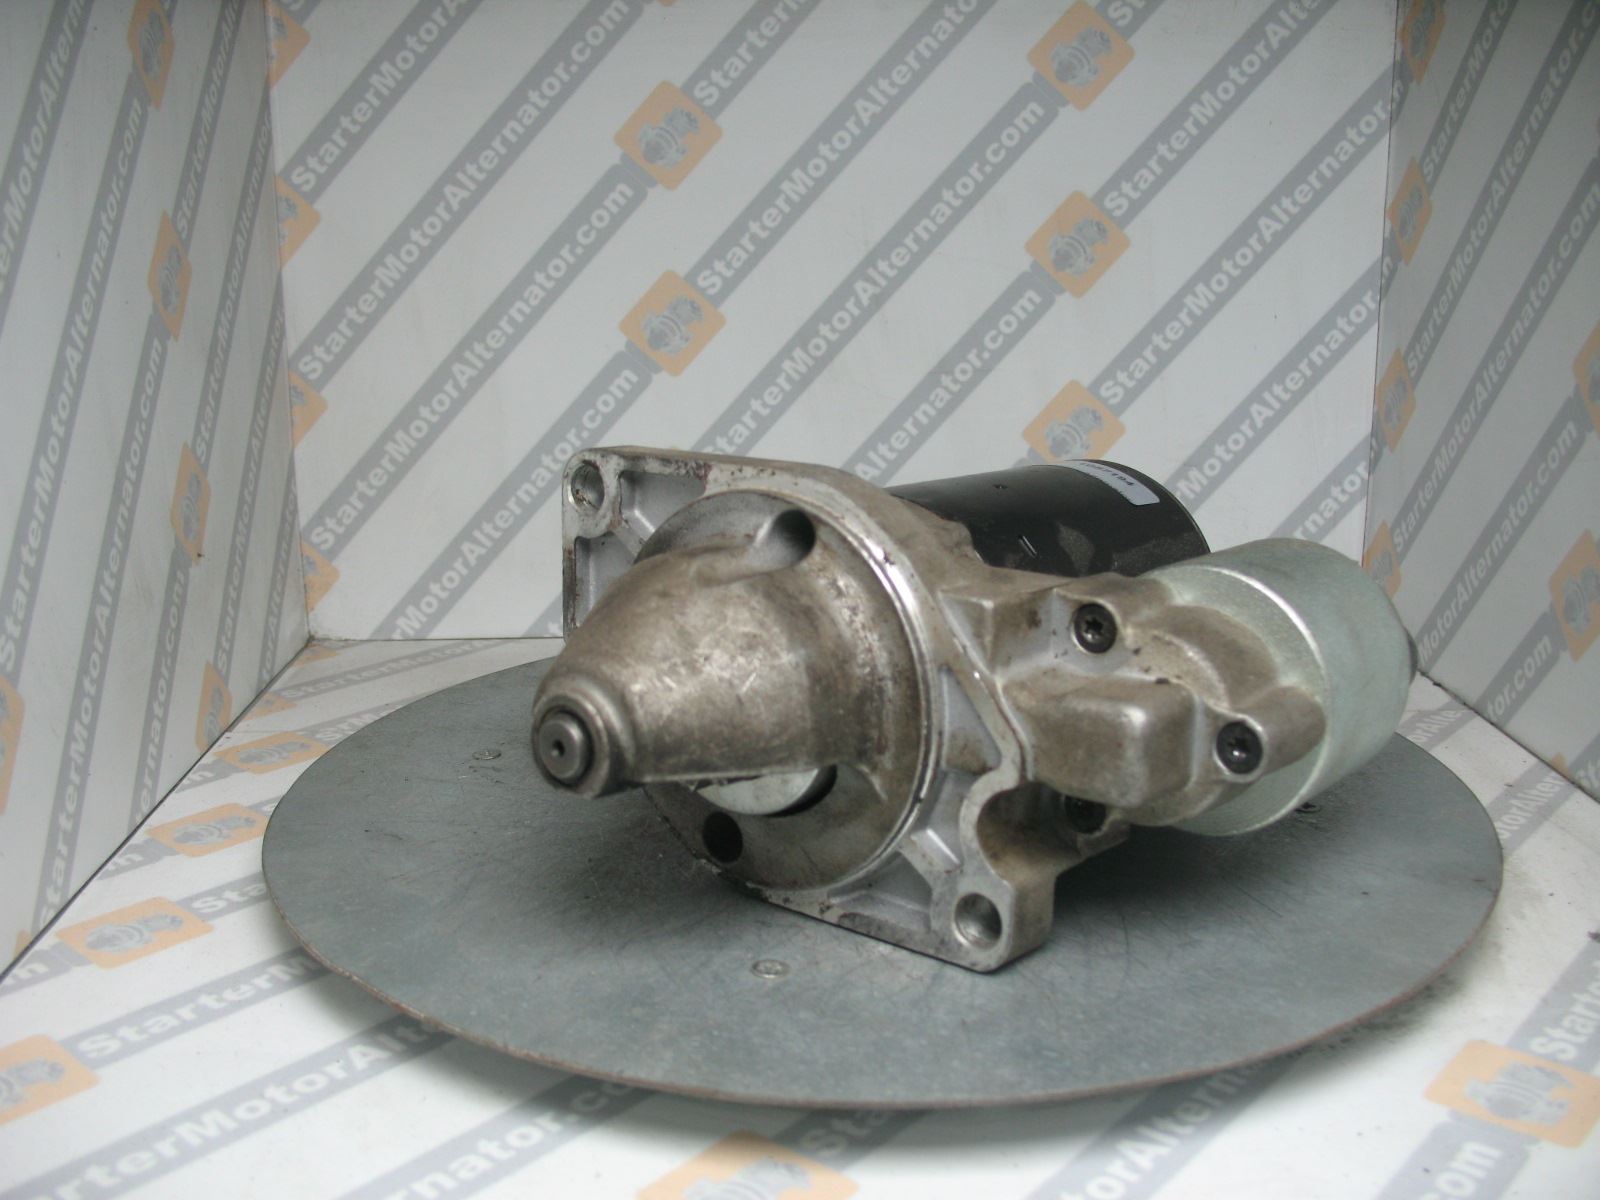 XIS1184 Starter Motor For MG / Rover